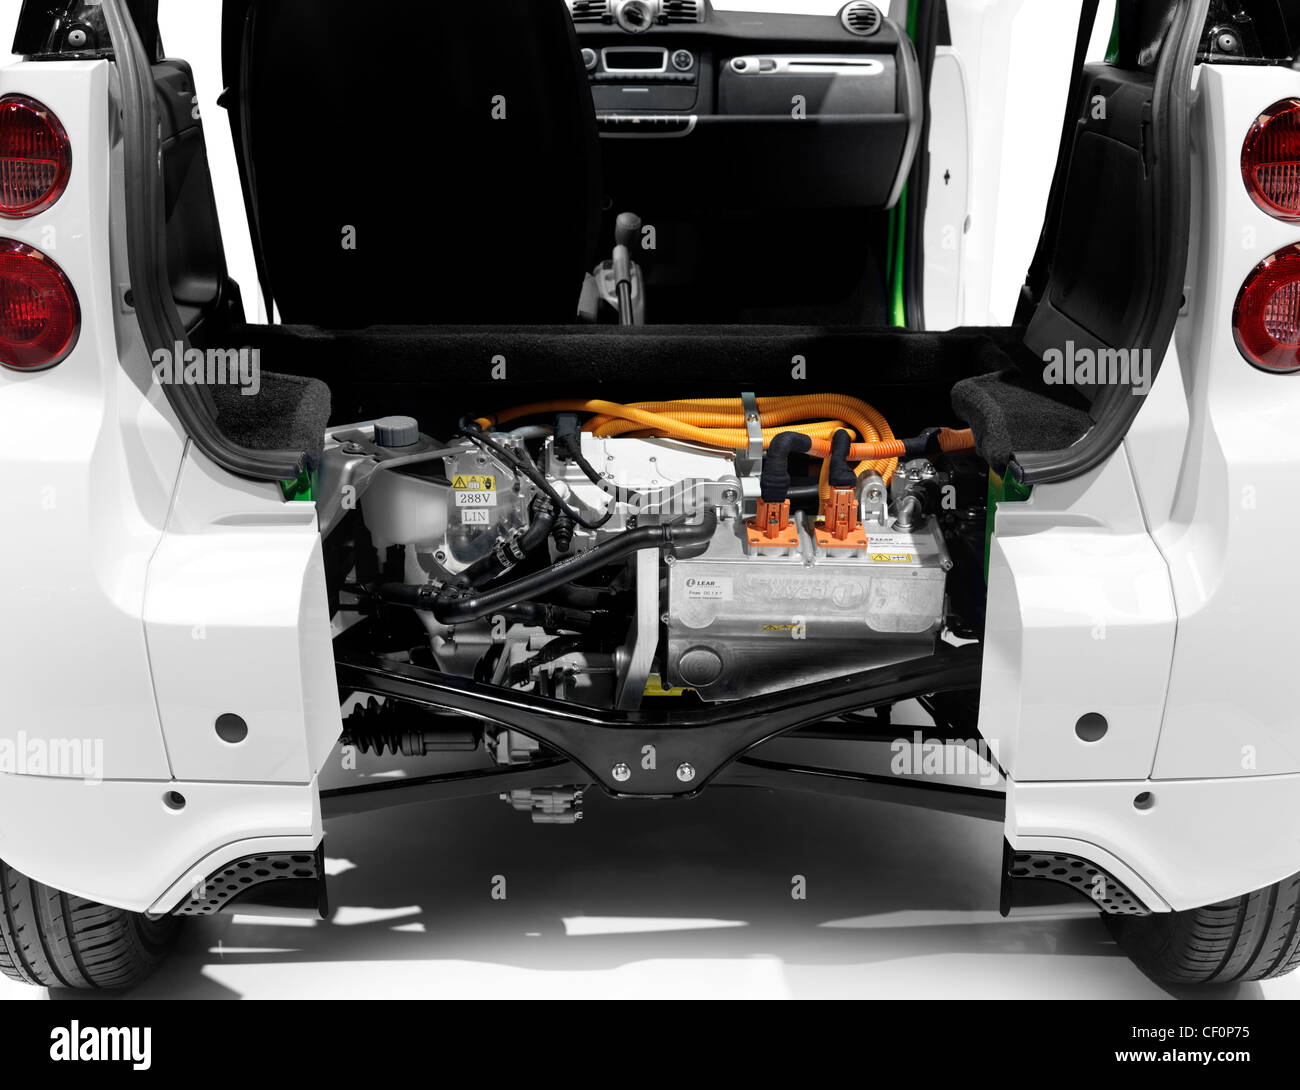 Smart fortwo elektroantrieb -Fotos und -Bildmaterial in hoher Auflösung –  Alamy